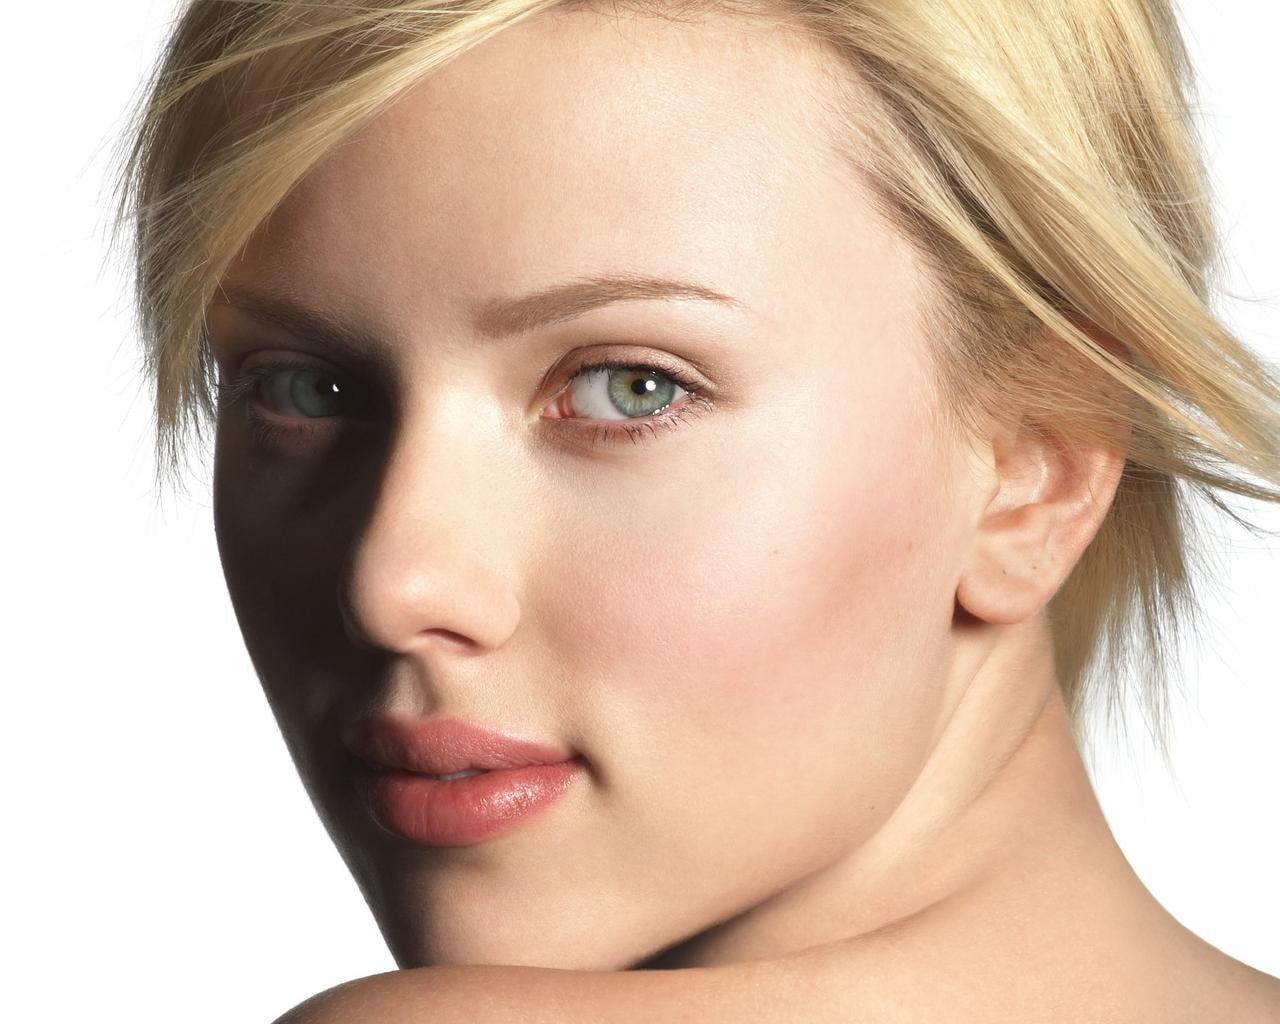 Scarlett Johansson, face, portrait, women, actress, celebrity